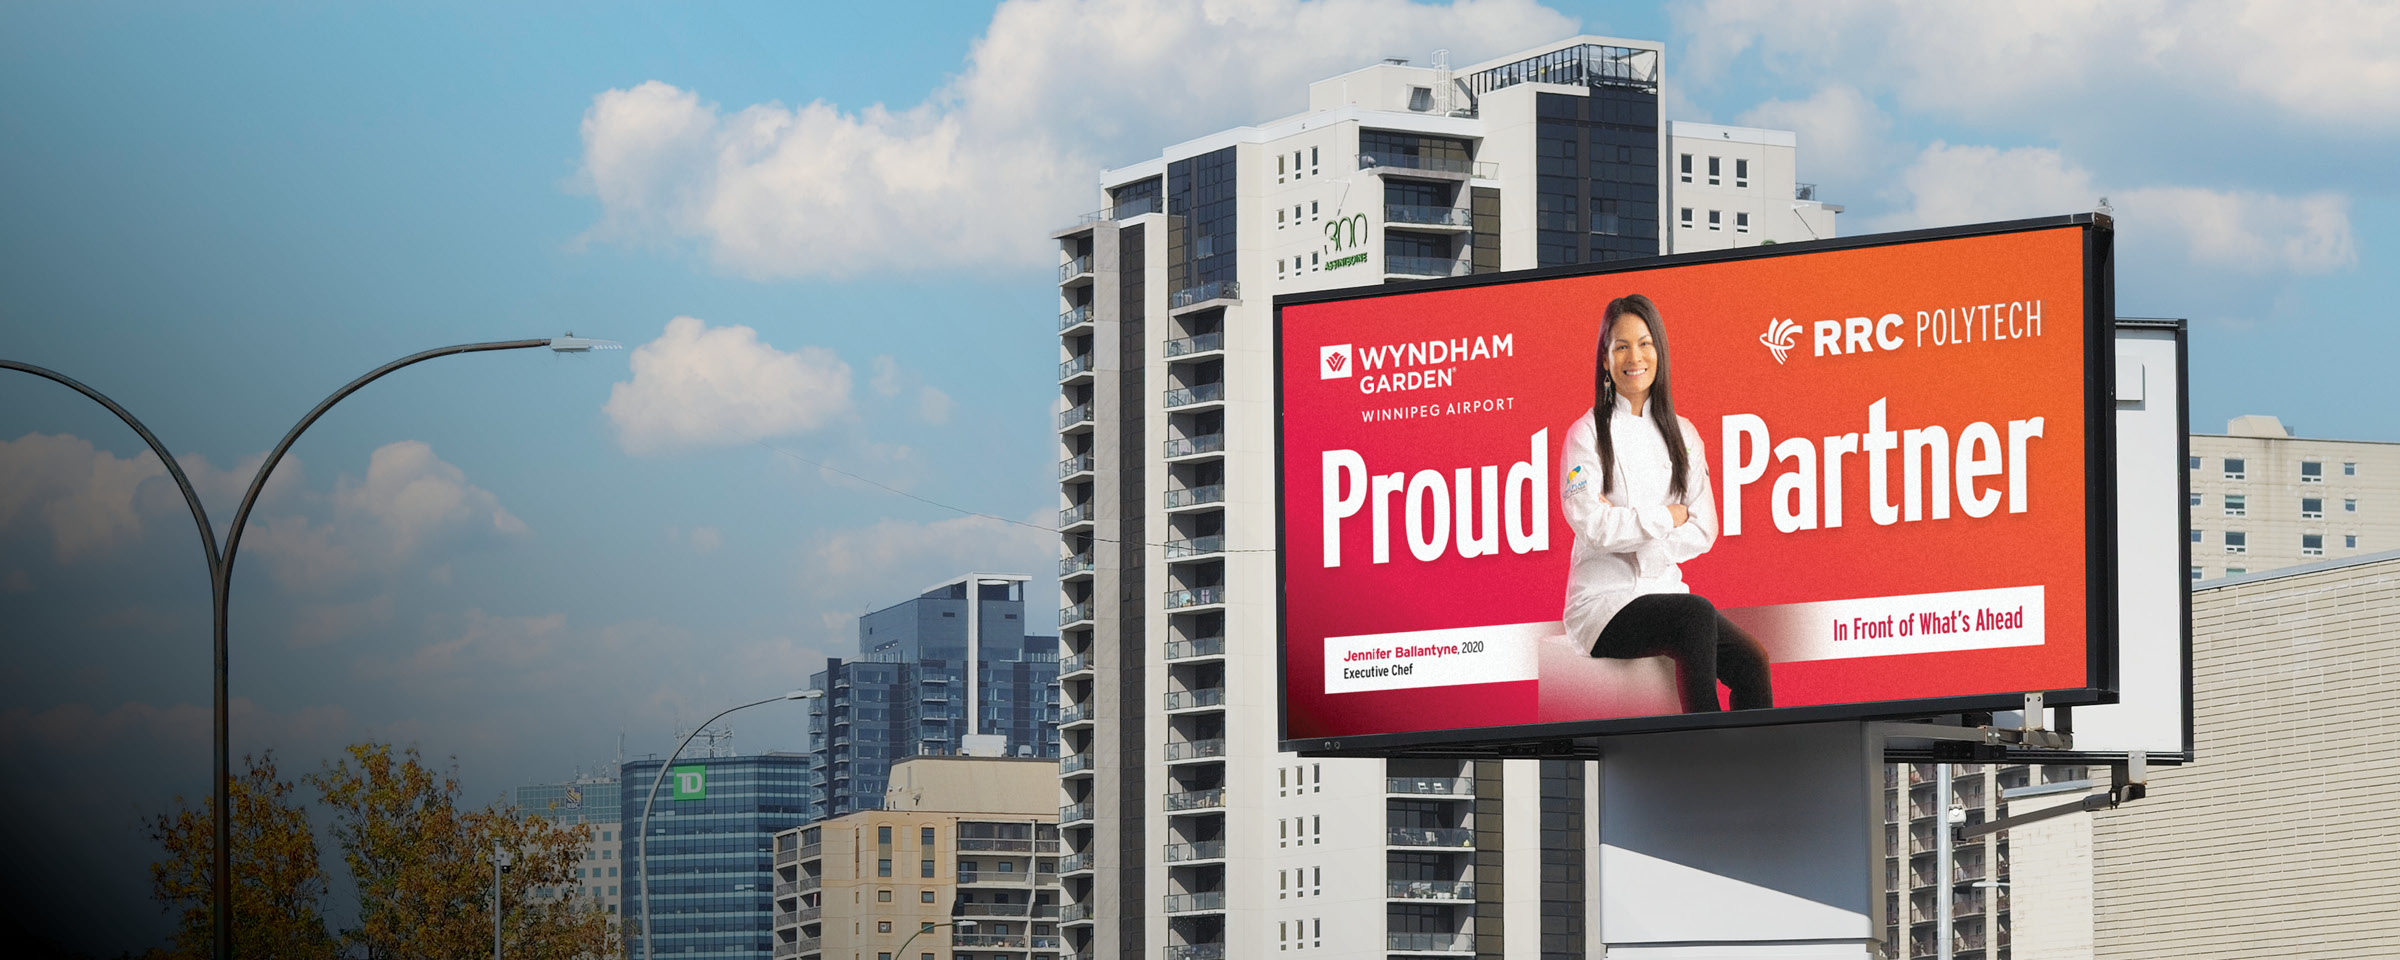 Winnipeg skyline with "Proud Partner" billboard of RRC Polytech graduate Jennifer Ballantyne.